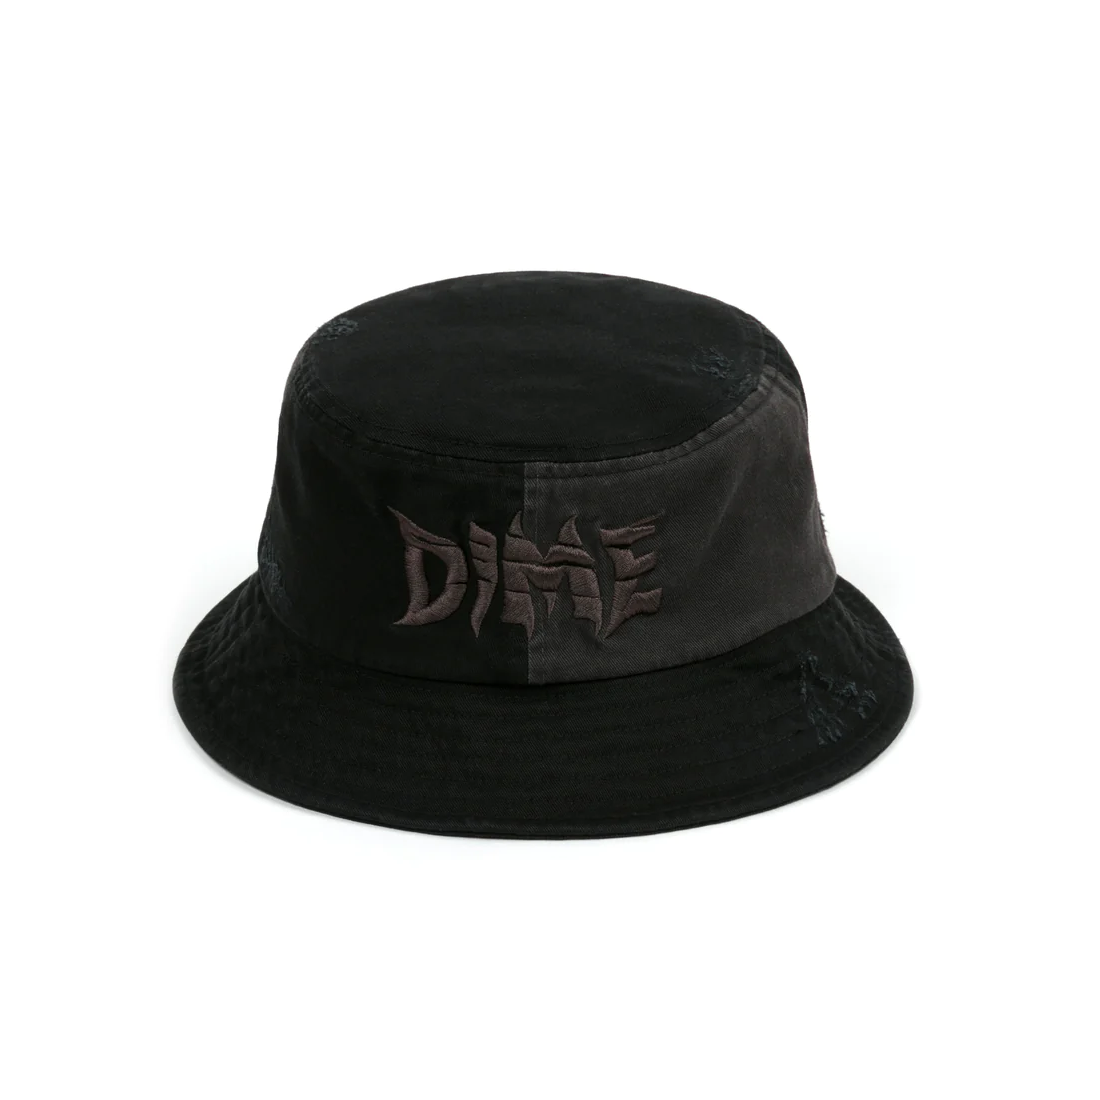 【Dime】Split Distressed Bucket Hat - Black